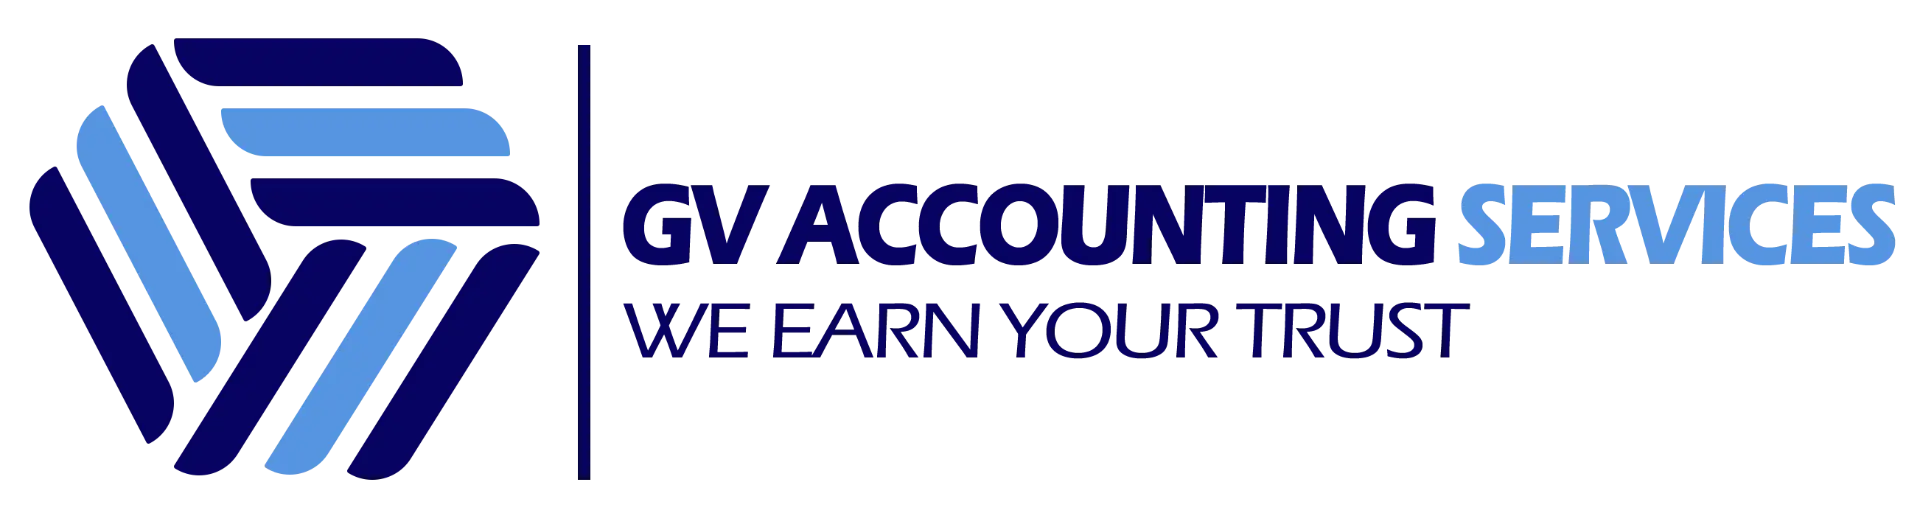 GV Accounting Services Ltd